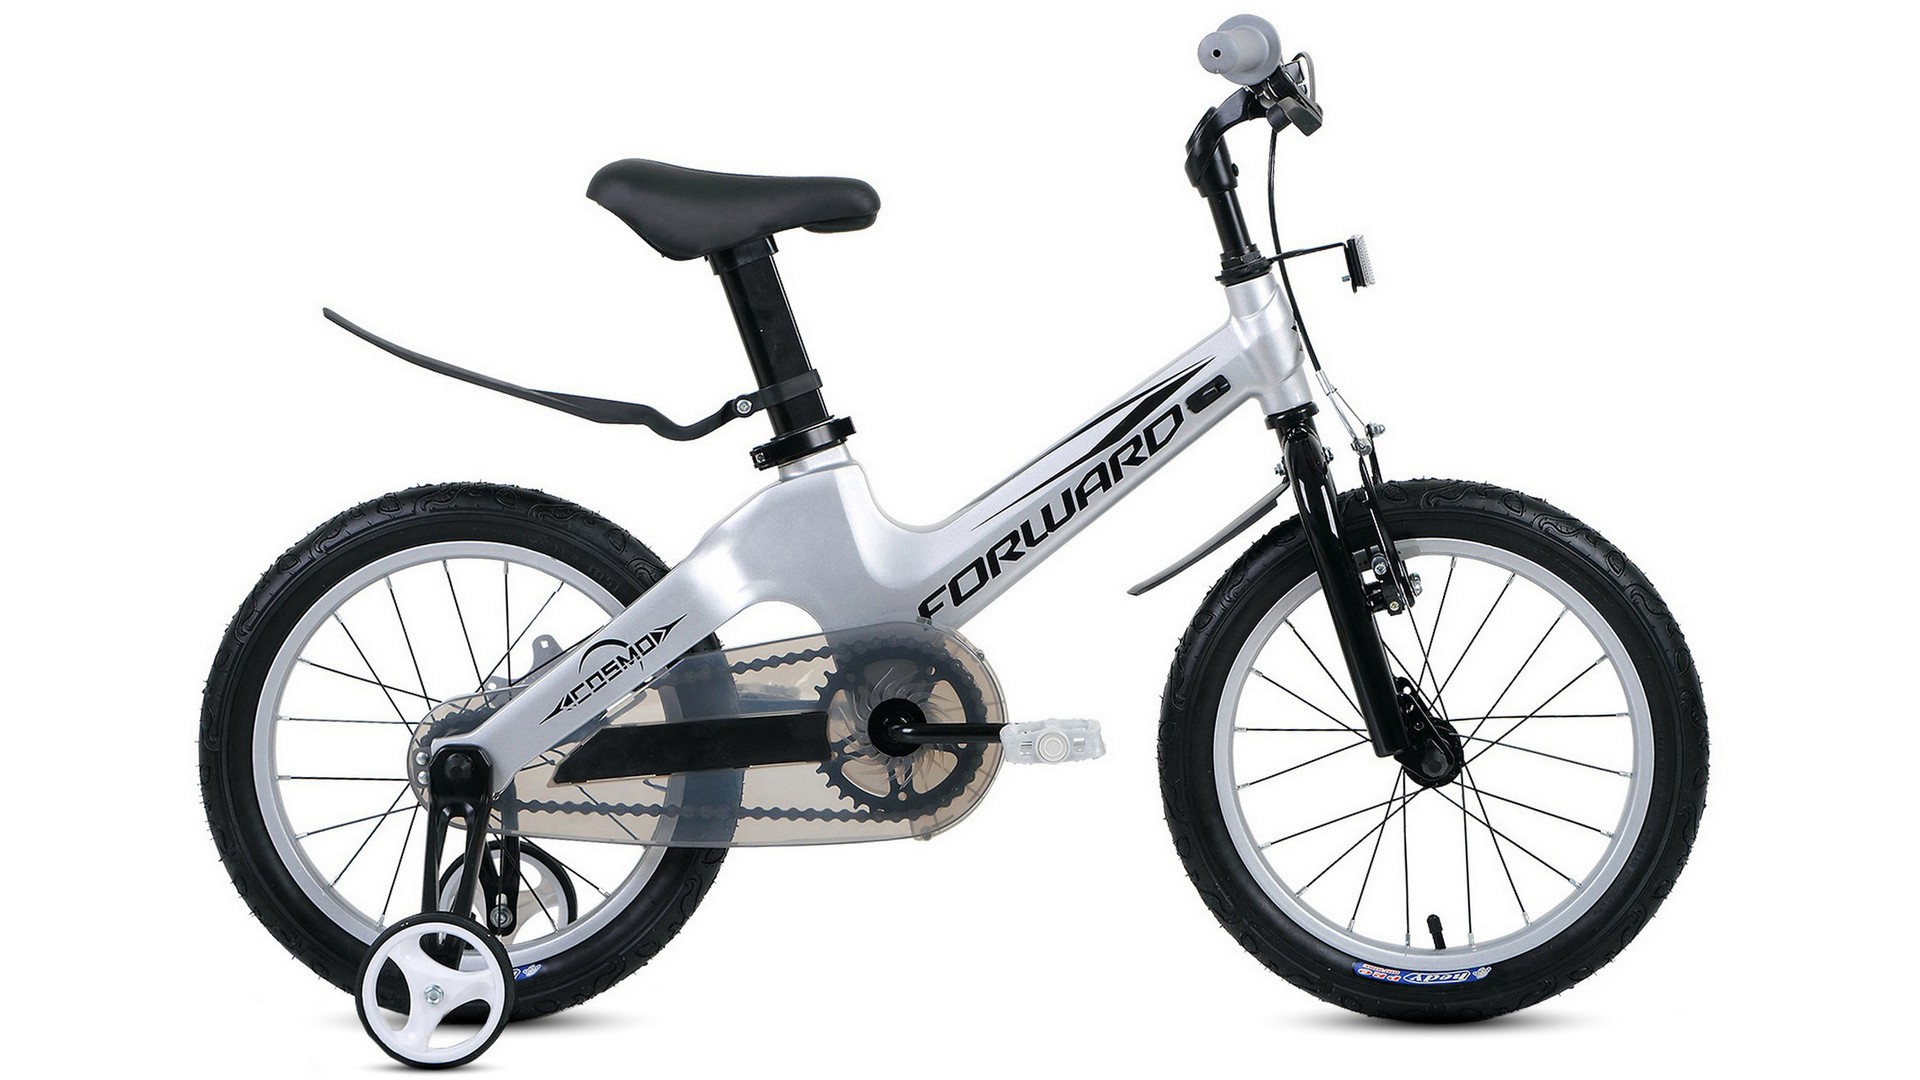 Детский велосипед Forward Cosmo 16, год 2021, цвет Серебристый